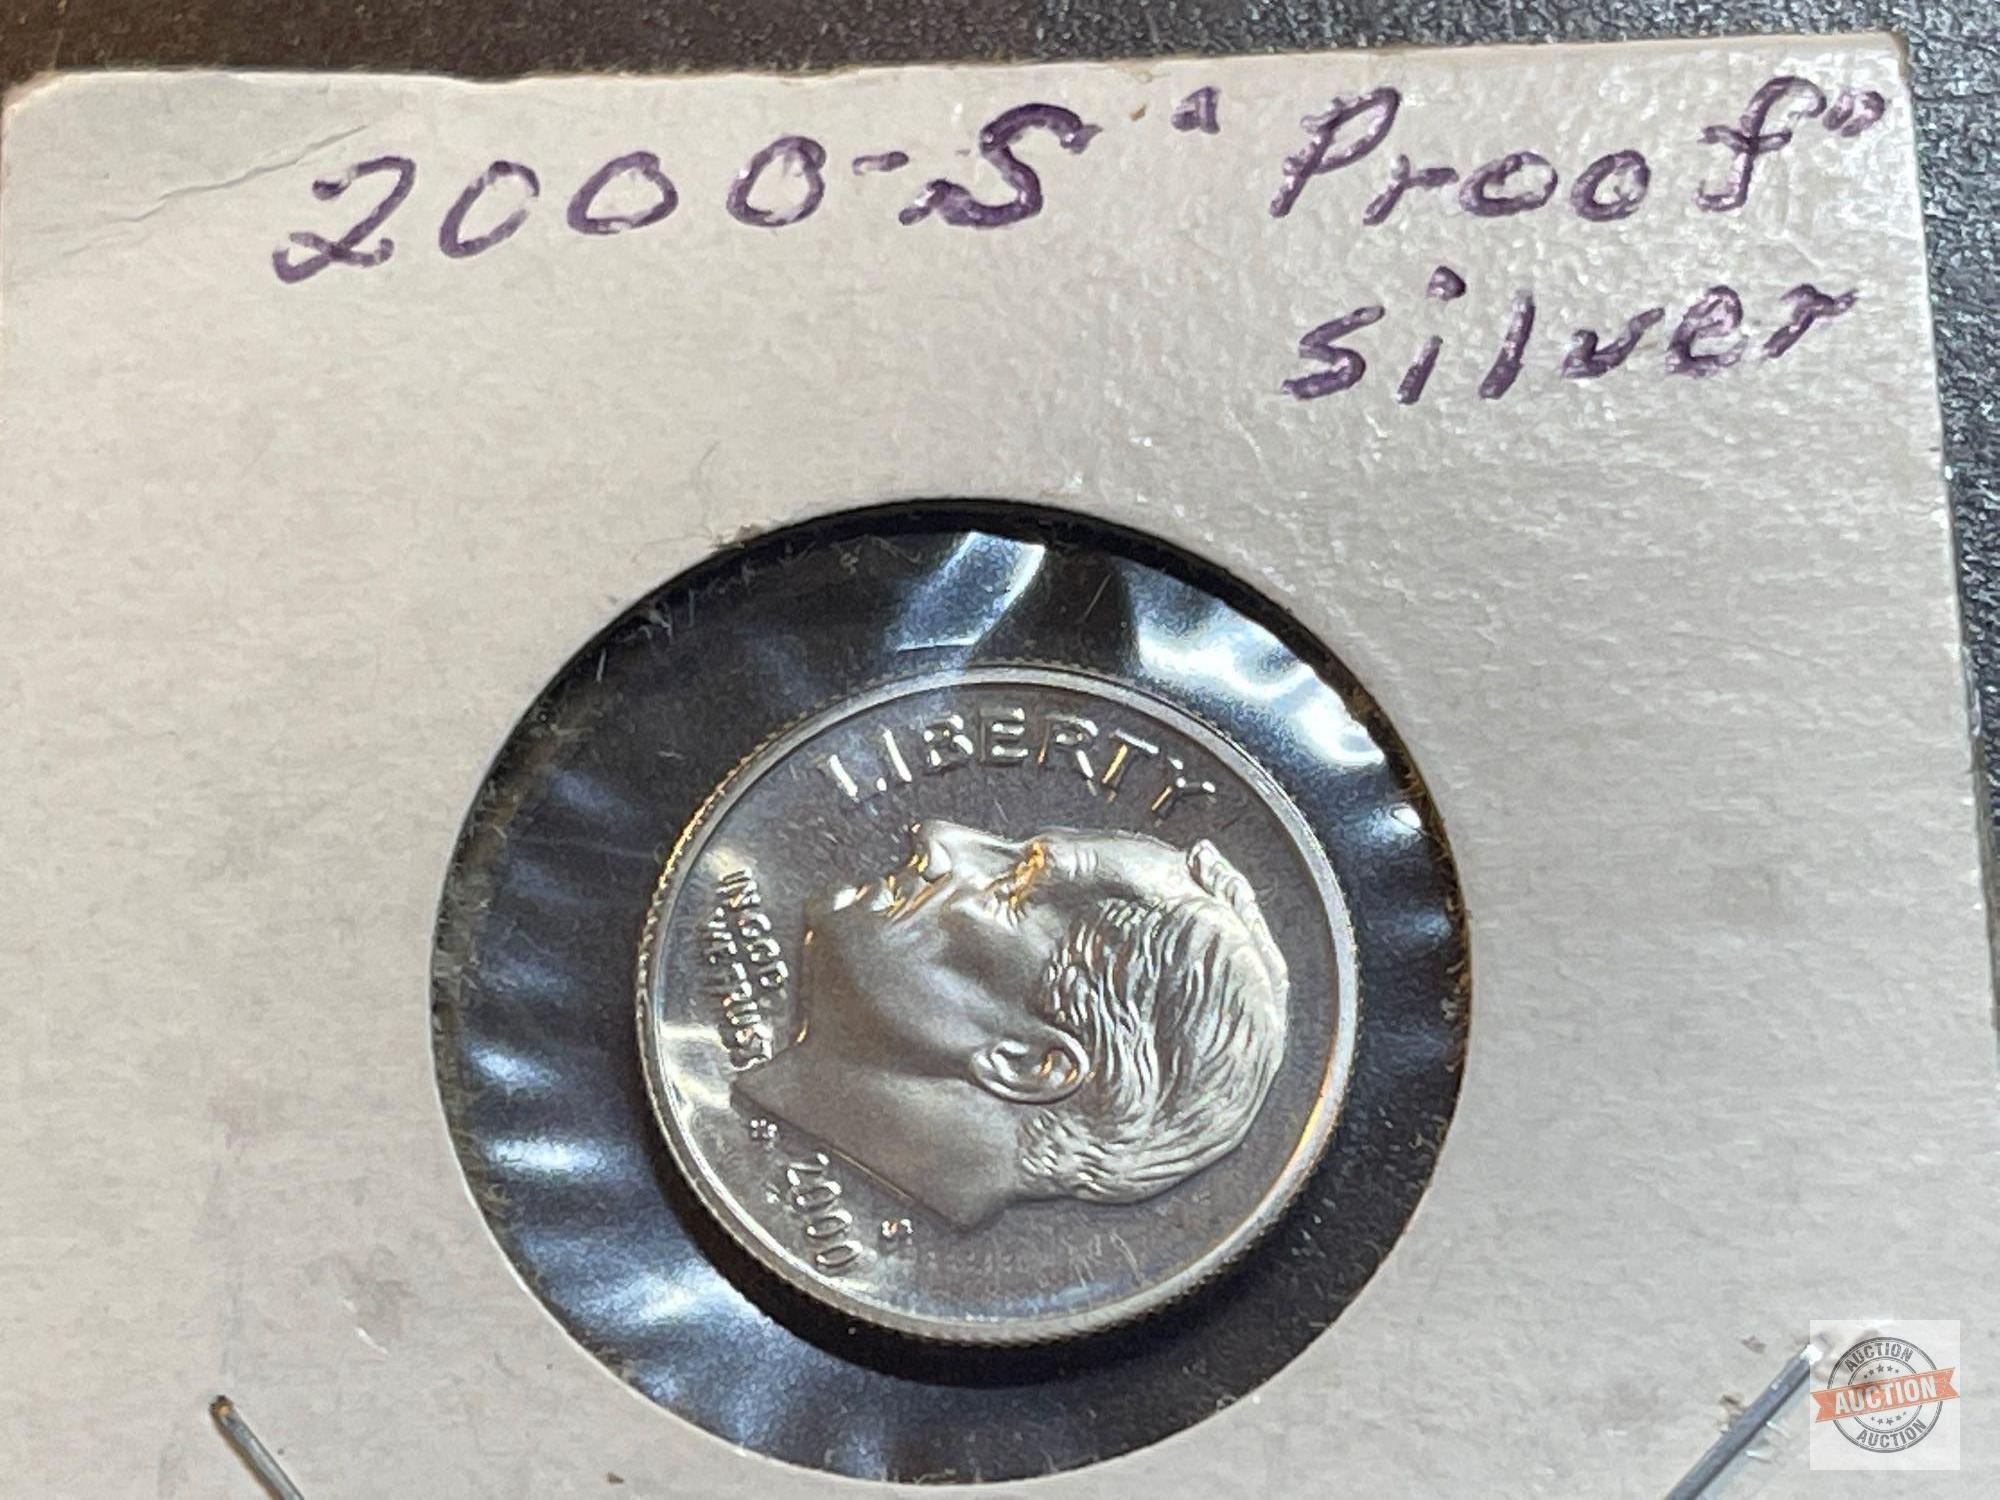 Coins - 3 US Dimes, 1964 -P Mint silver, 1964-D, 2000 -S Proof silver